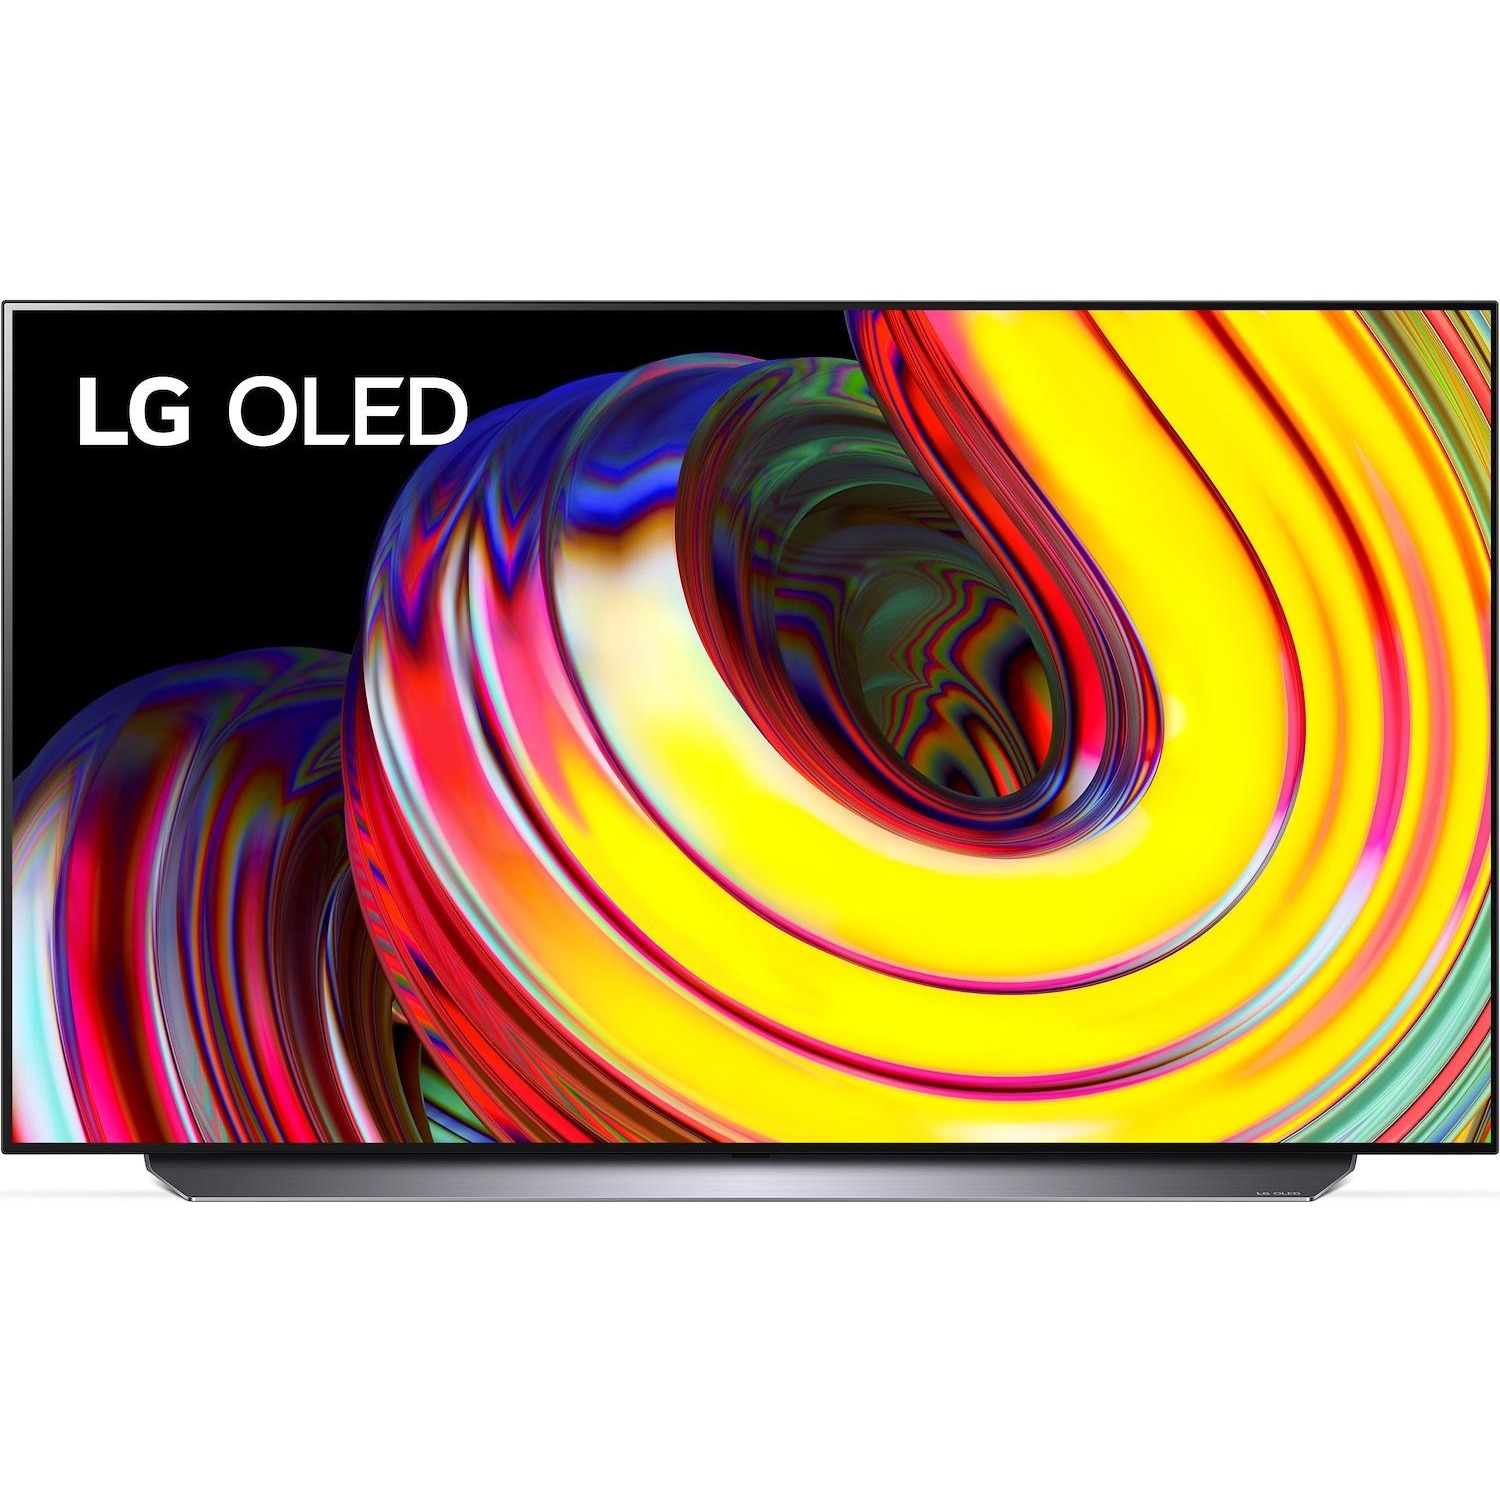 Immagine per TV OLED UHD 4K Smart LG OLED55CS6 da DIMOStore